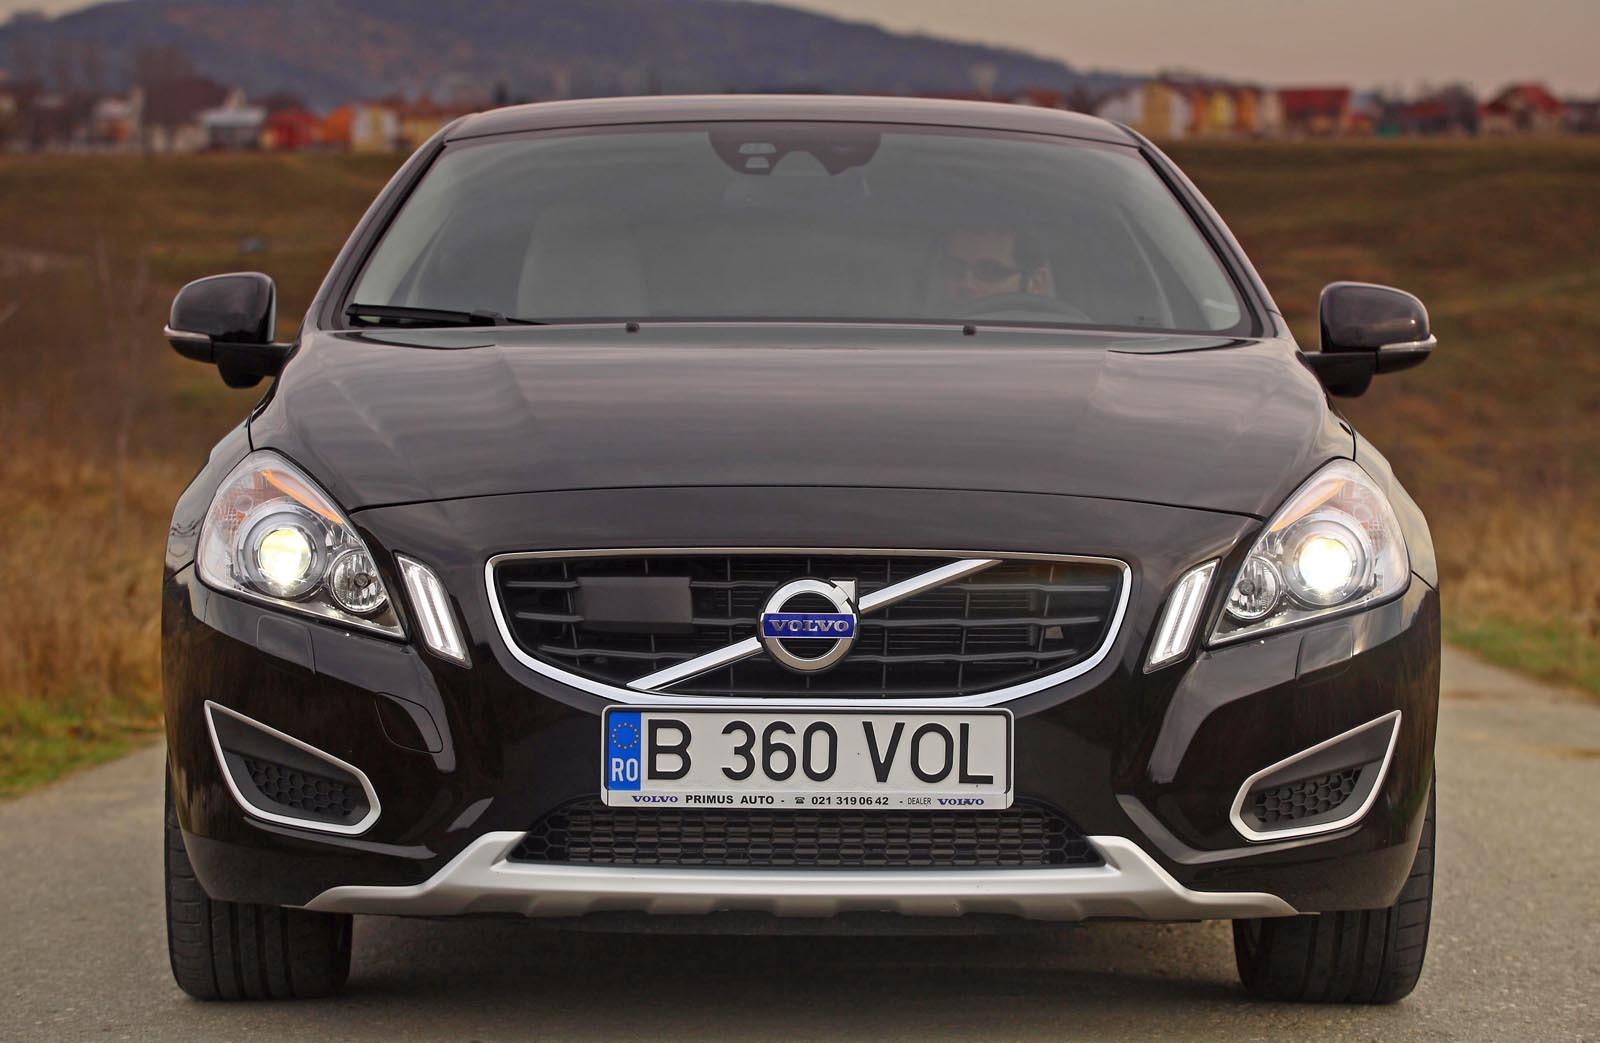 Volvo V60 afiseaza o puternica personalitate si o imagine de marca proaspata